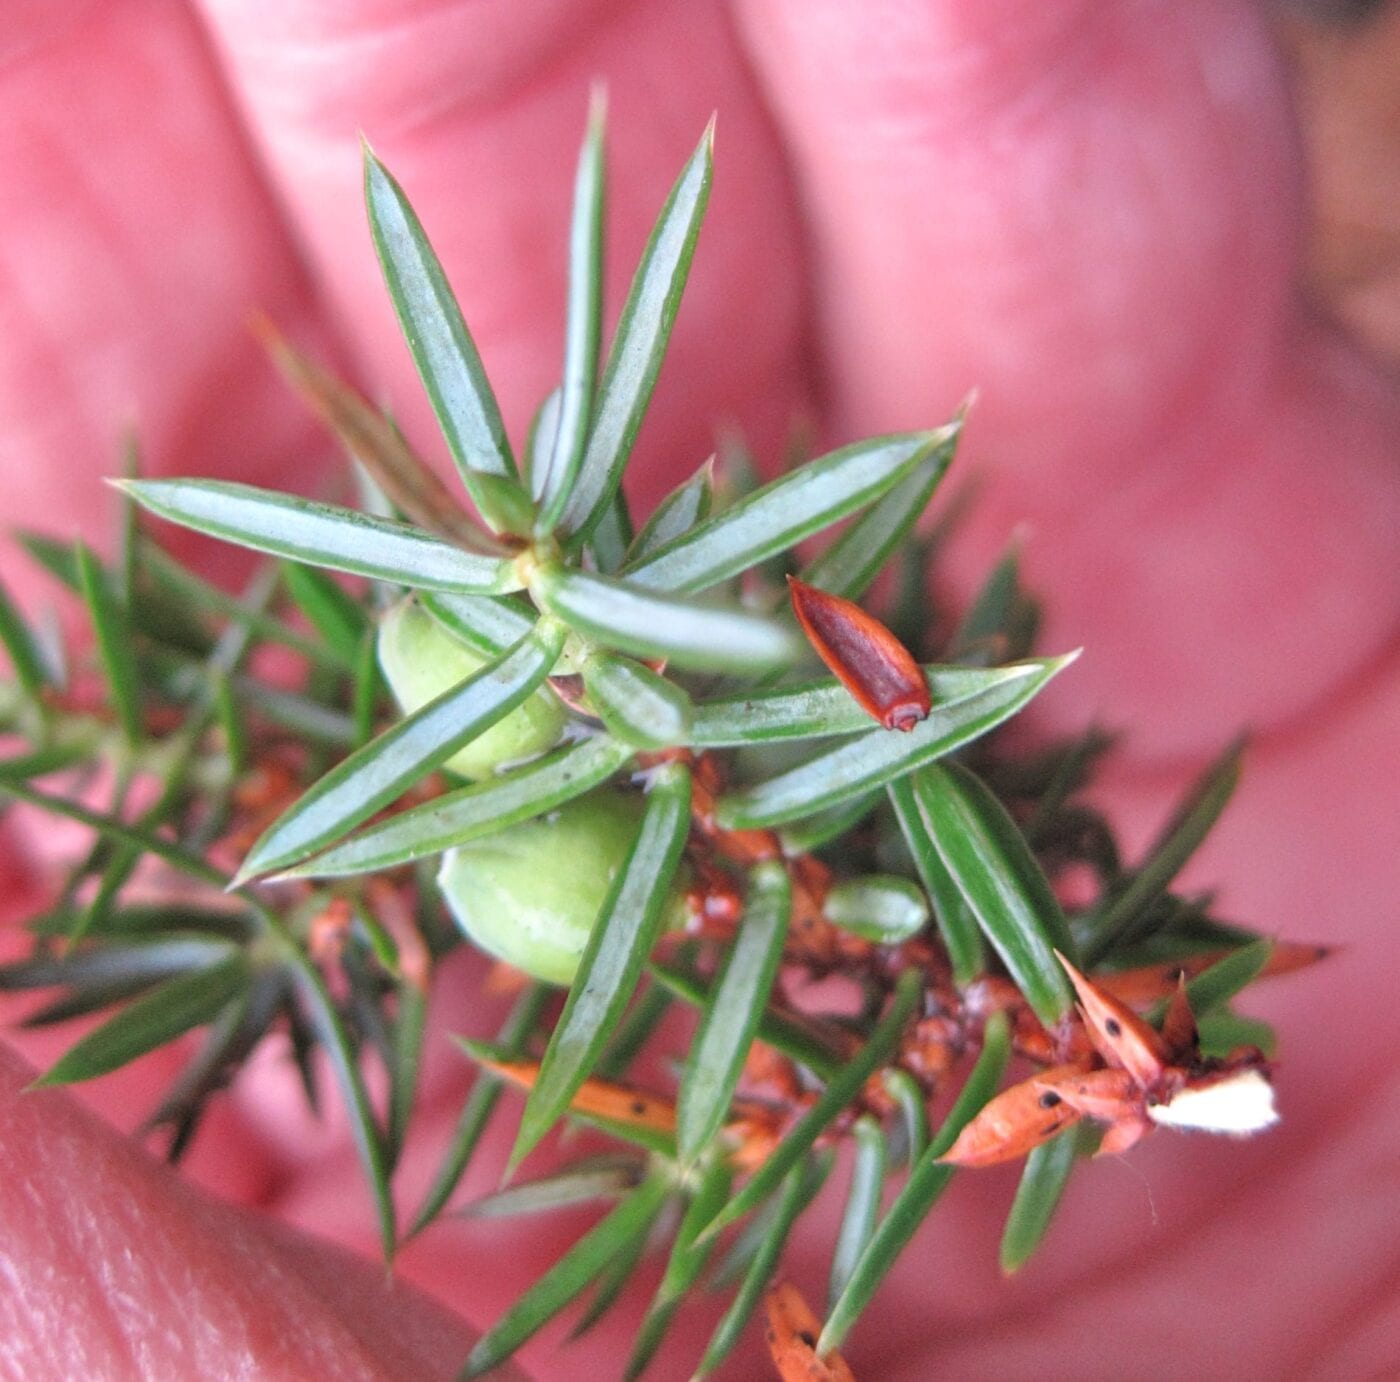 common juniper needles